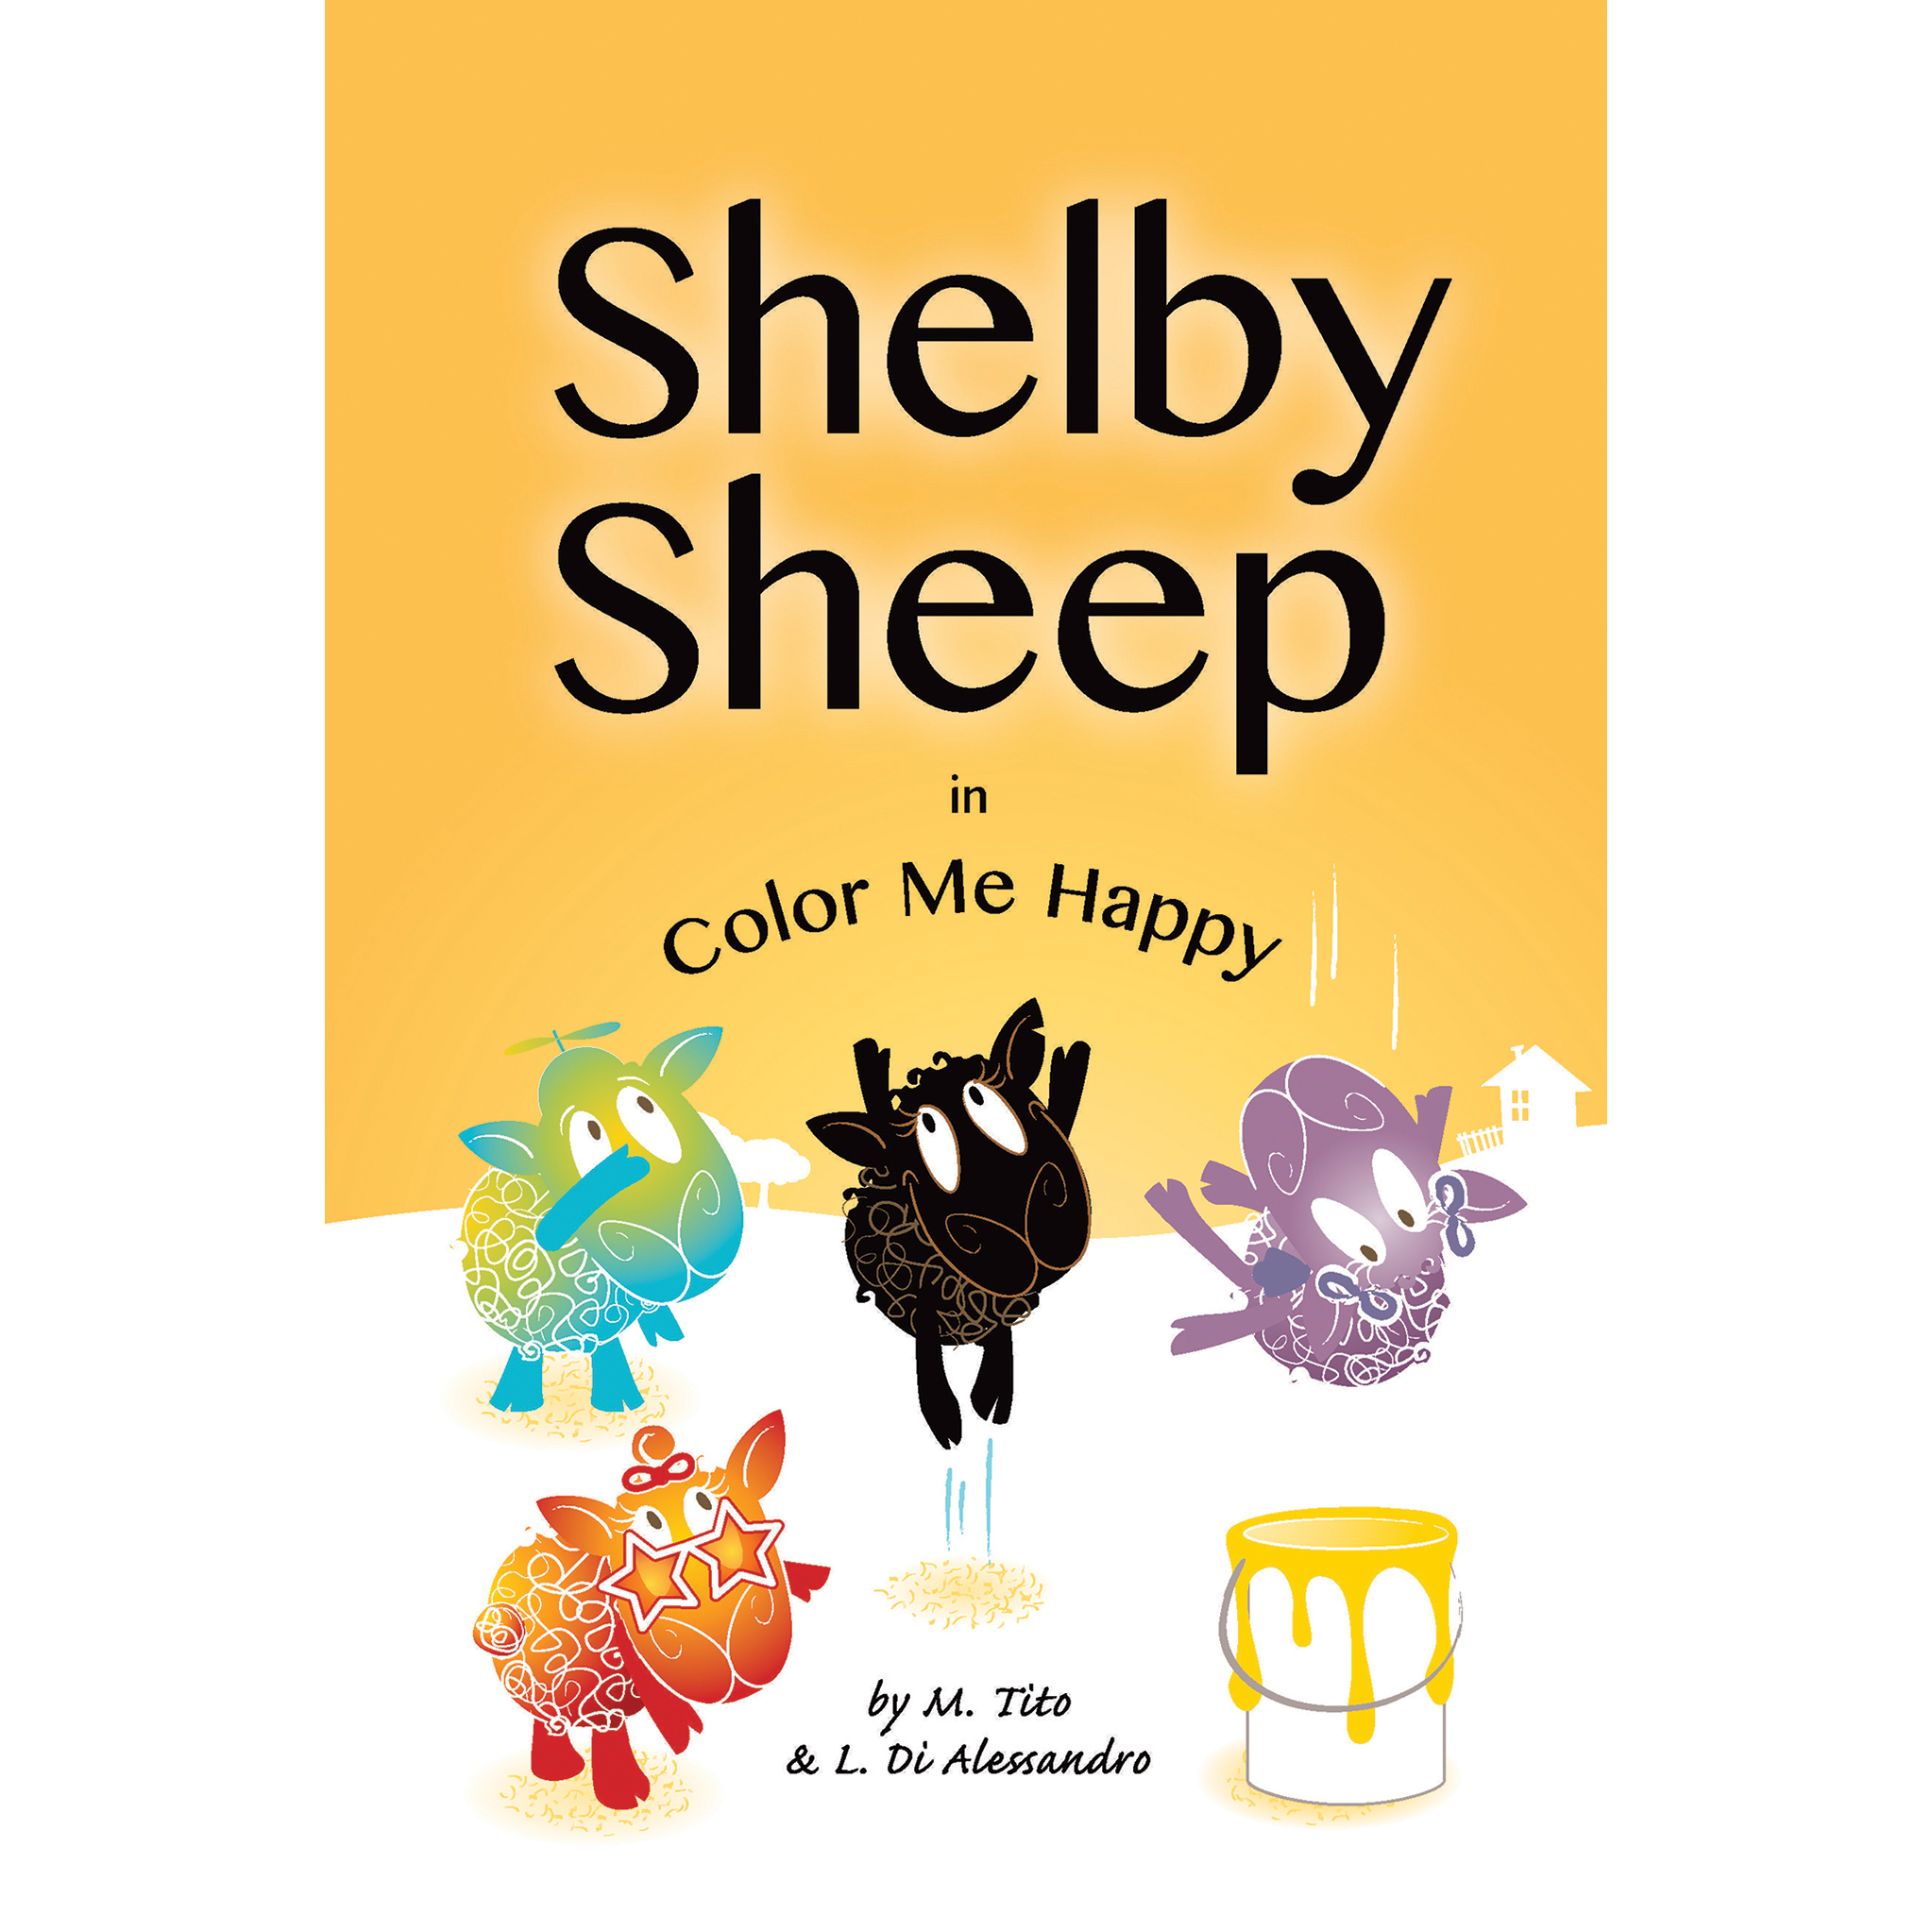 ShelbySheep_ColorMeHappy_ISBN_978-1-940692-19-7_Sqr.jpg